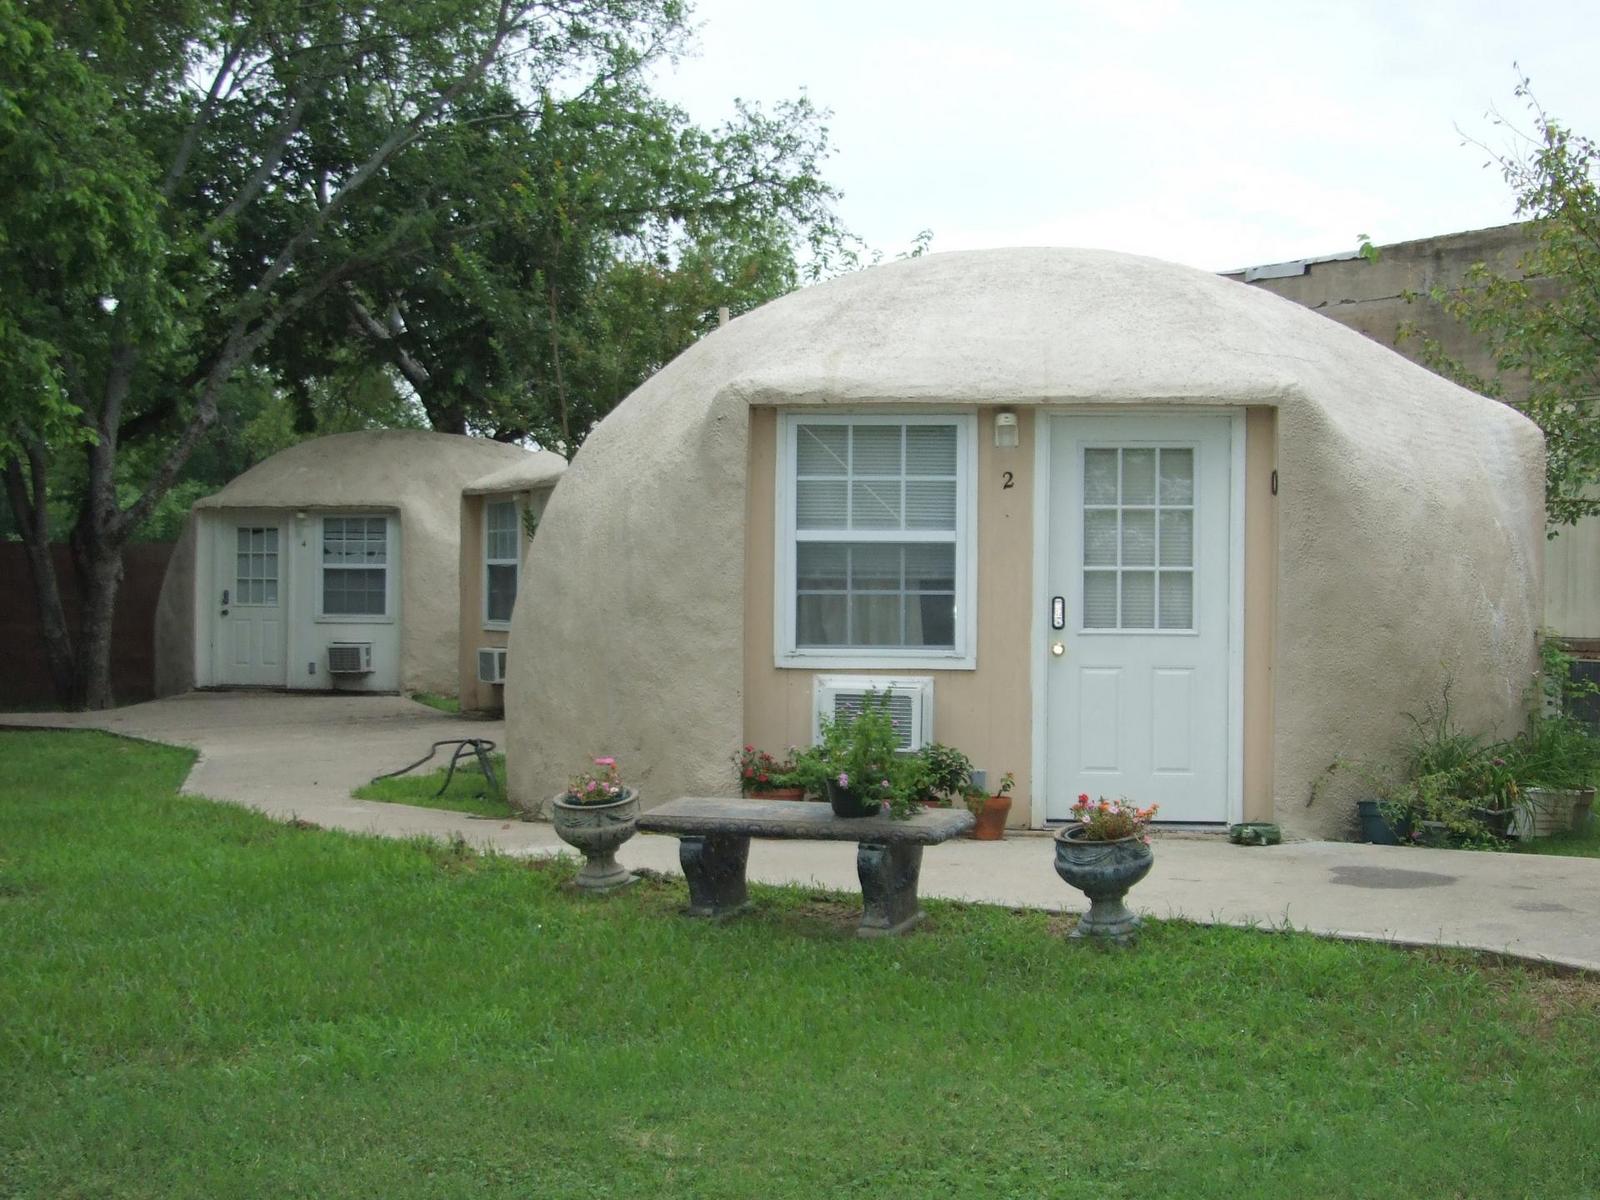 Monolithic Dome rentals at Secret Garden, Italy, Texas.